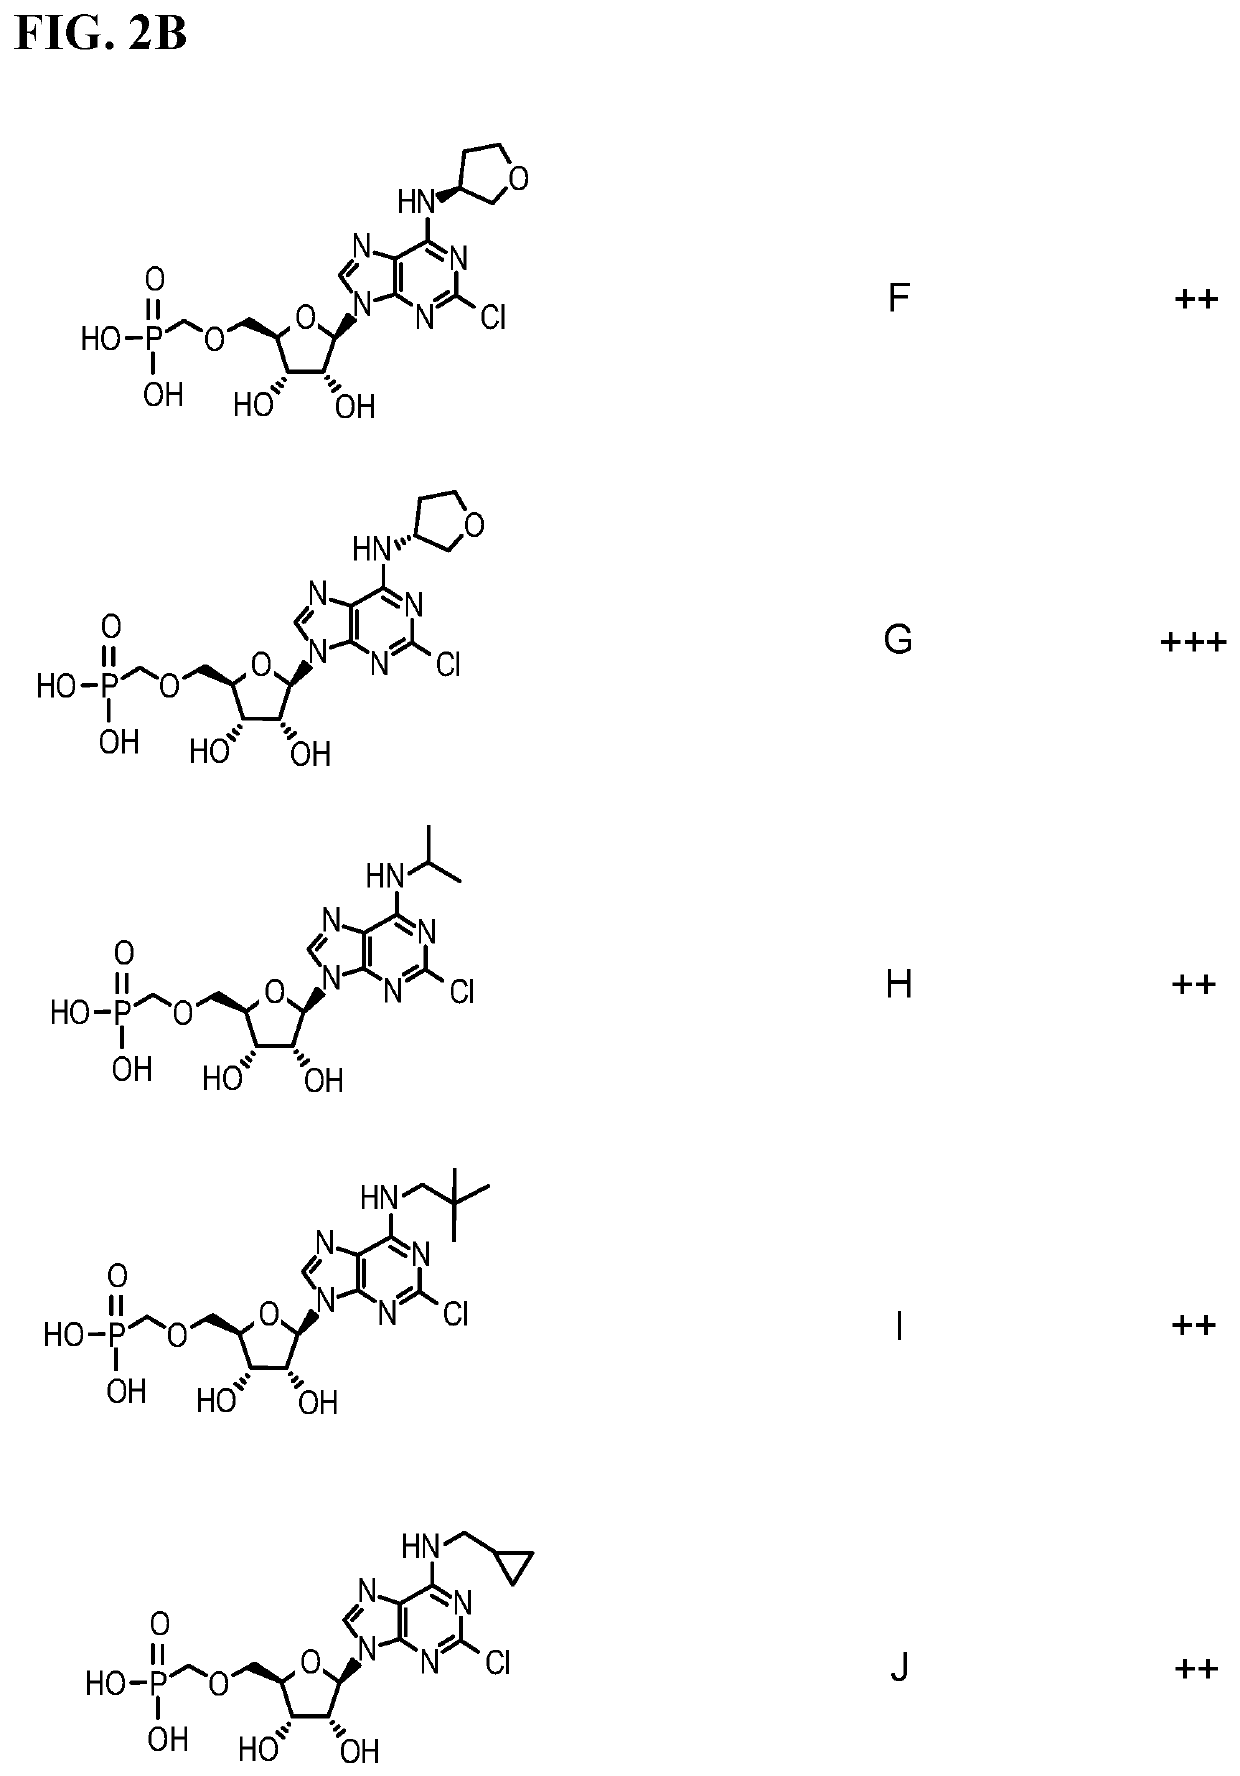 Inhibitors of adenosine 5′-nucleotidase